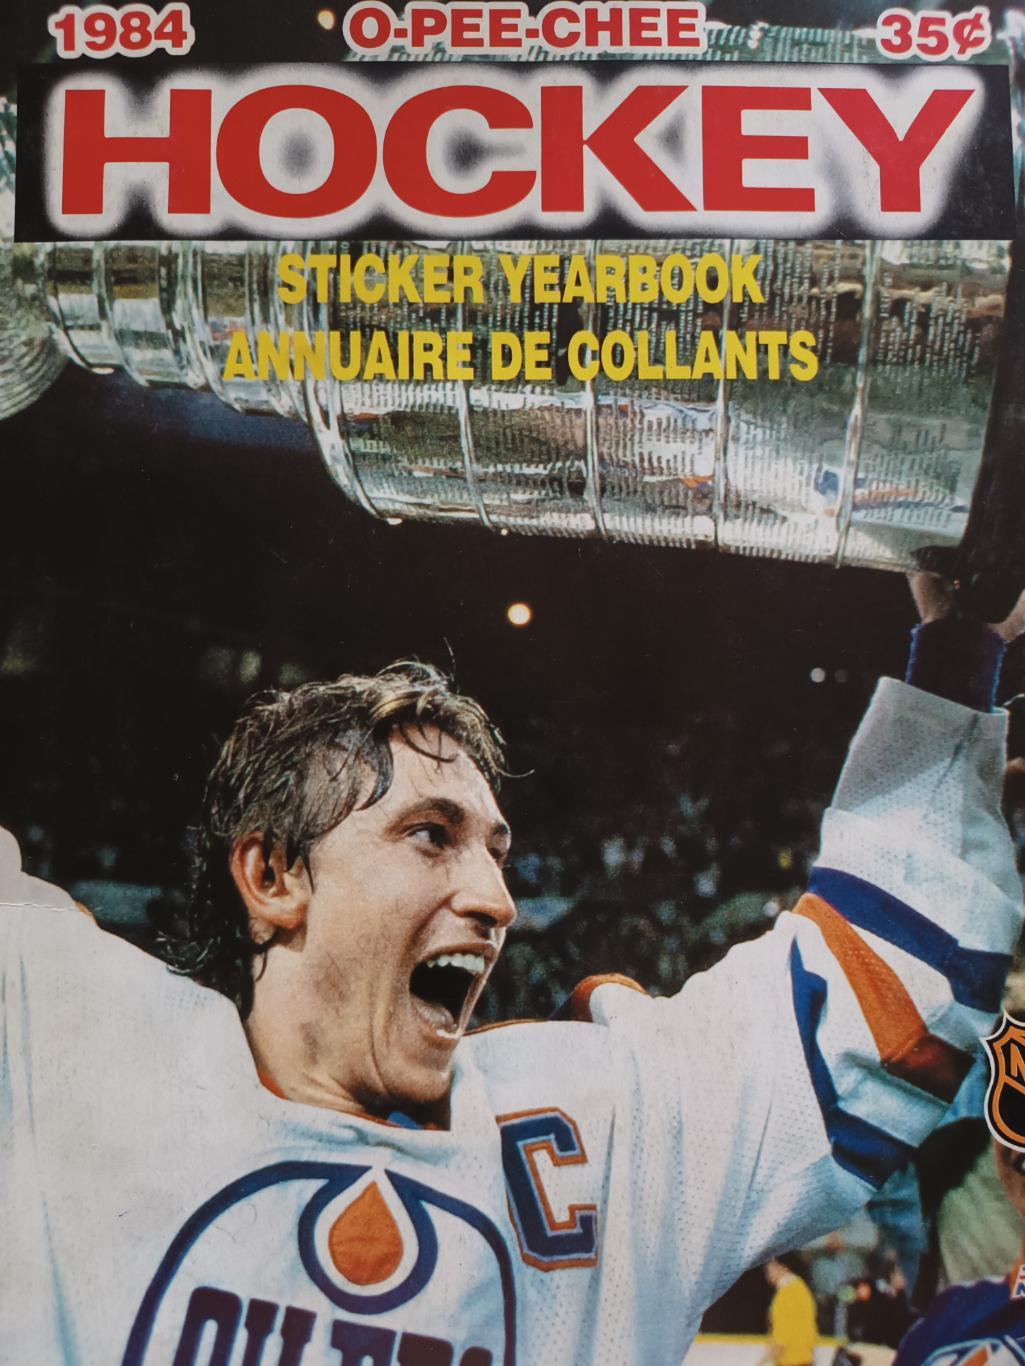 ХОККЕЙ АЛЬБОМ НАКЛЕЕК НХЛ О ПИИ ЧИИ 1984 NHL O-PEE-CHEE STICKER ALBUM